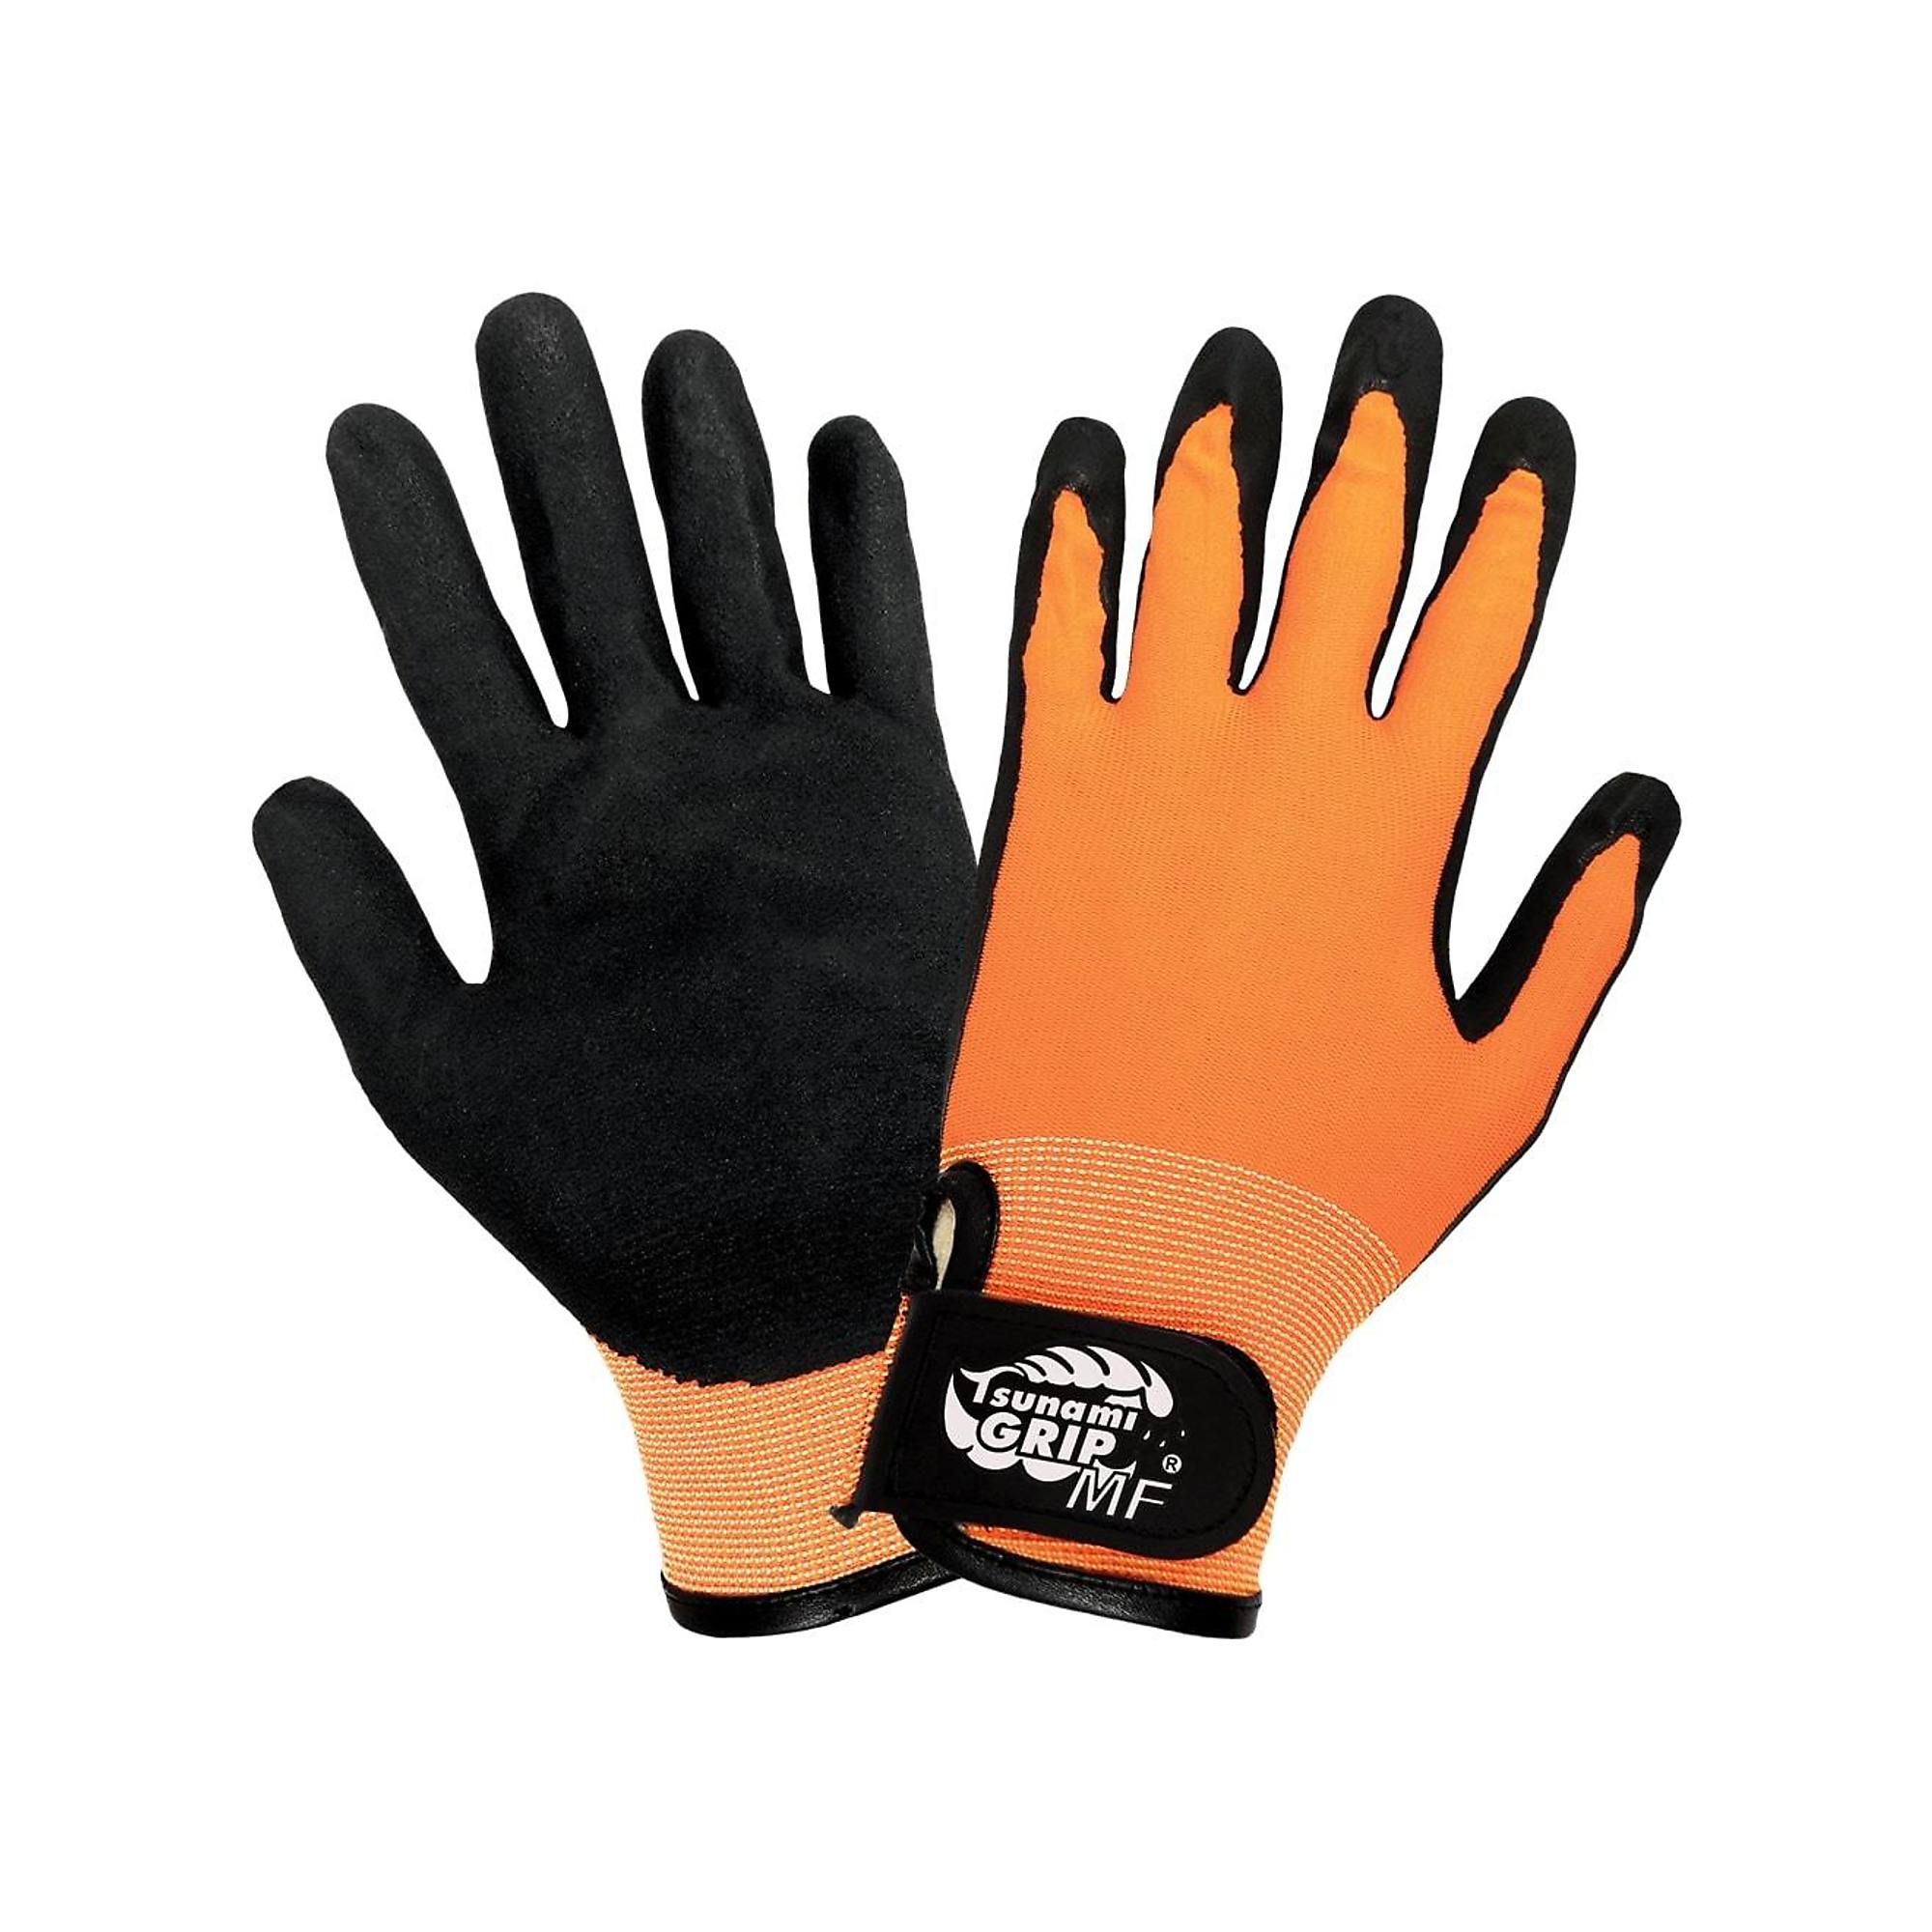 Global Glove Tsunami Grip , MF HV Mach Finish Nitrile Palm Coated Gloves, Size S, Color High-Visibility Orange/Black, Included (qty.) 12 Model 510MFV-